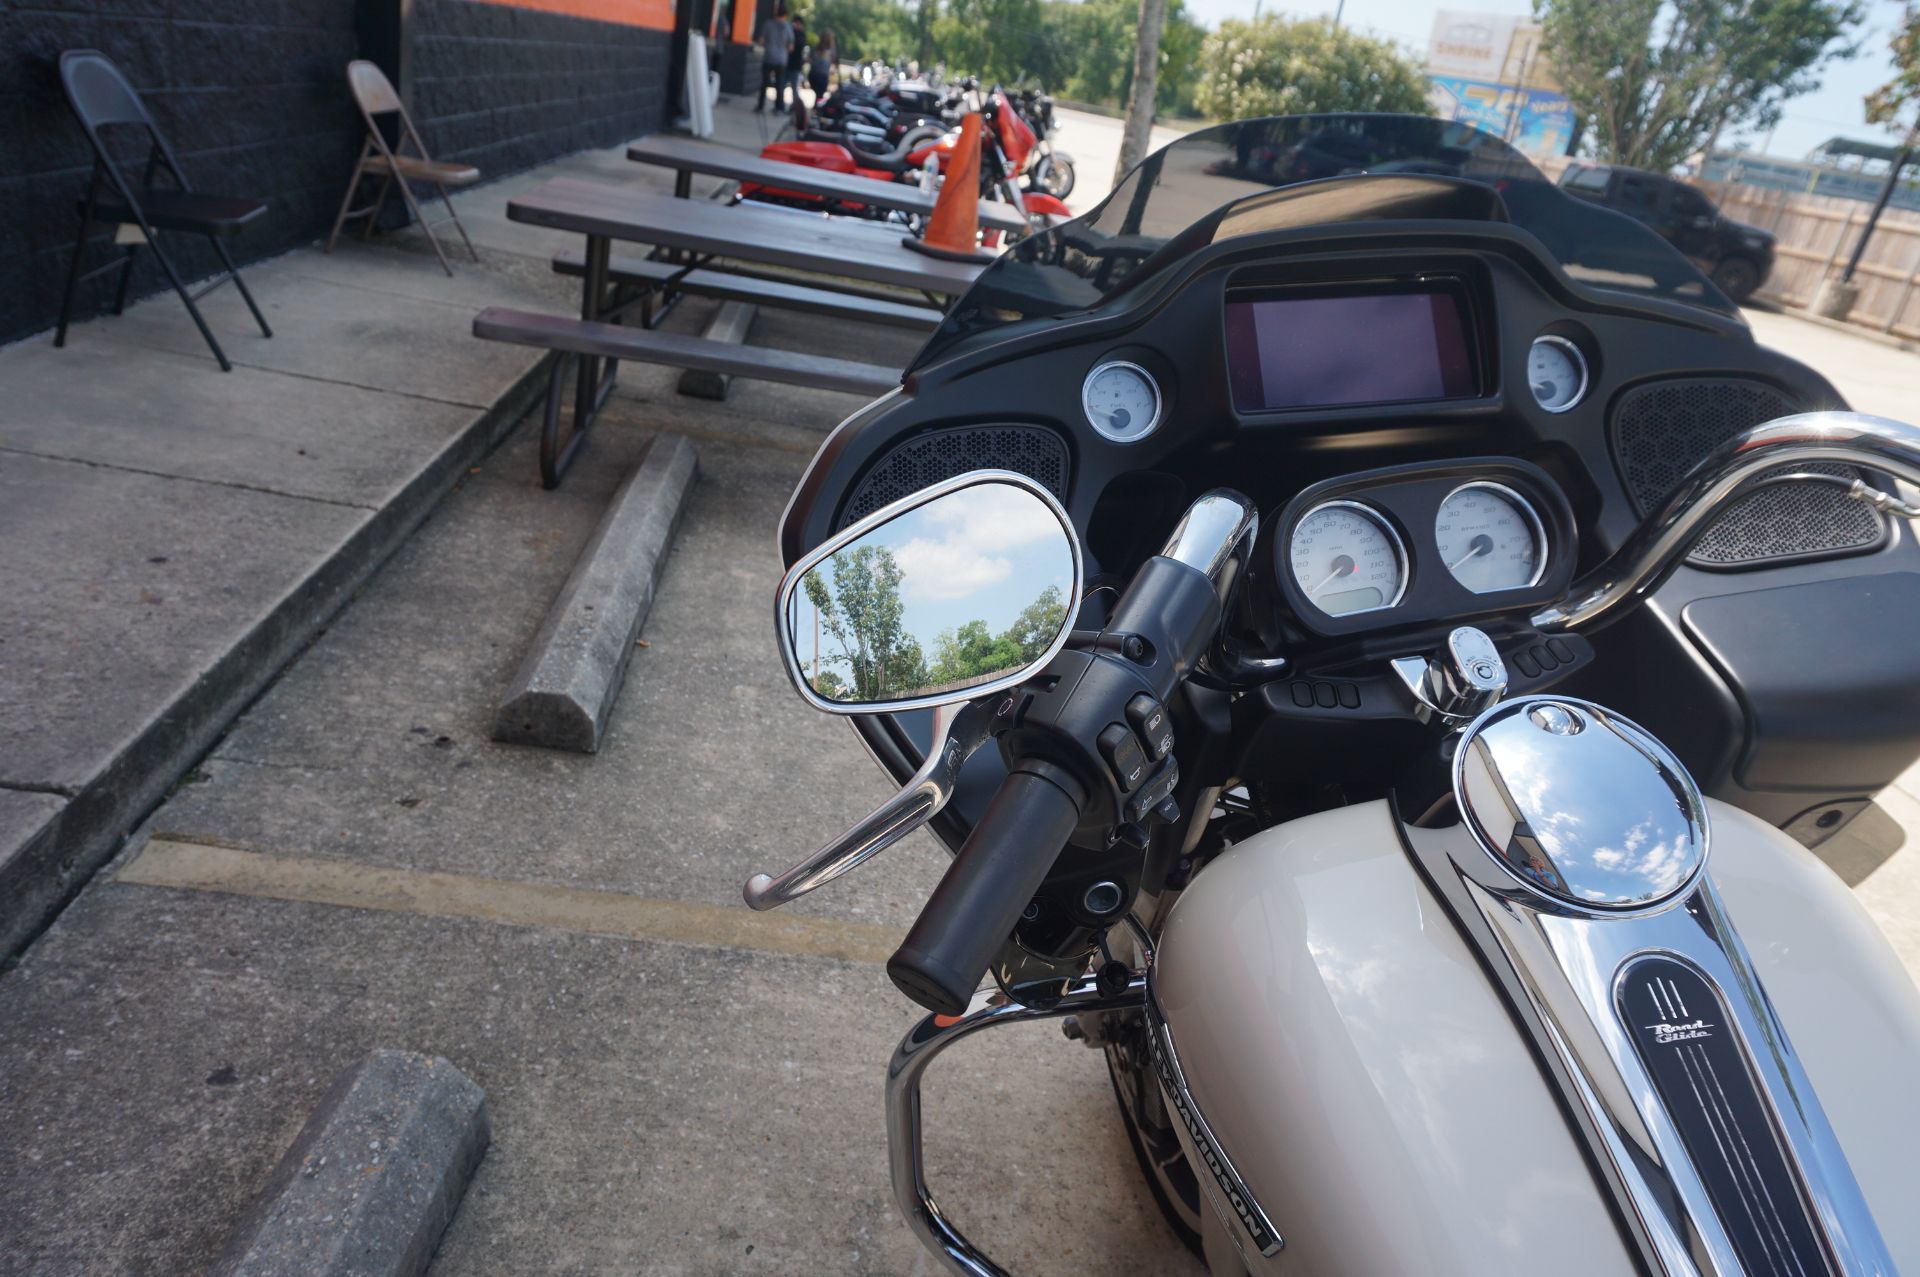 2022 Harley-Davidson Road Glide® in Metairie, Louisiana - Photo 11